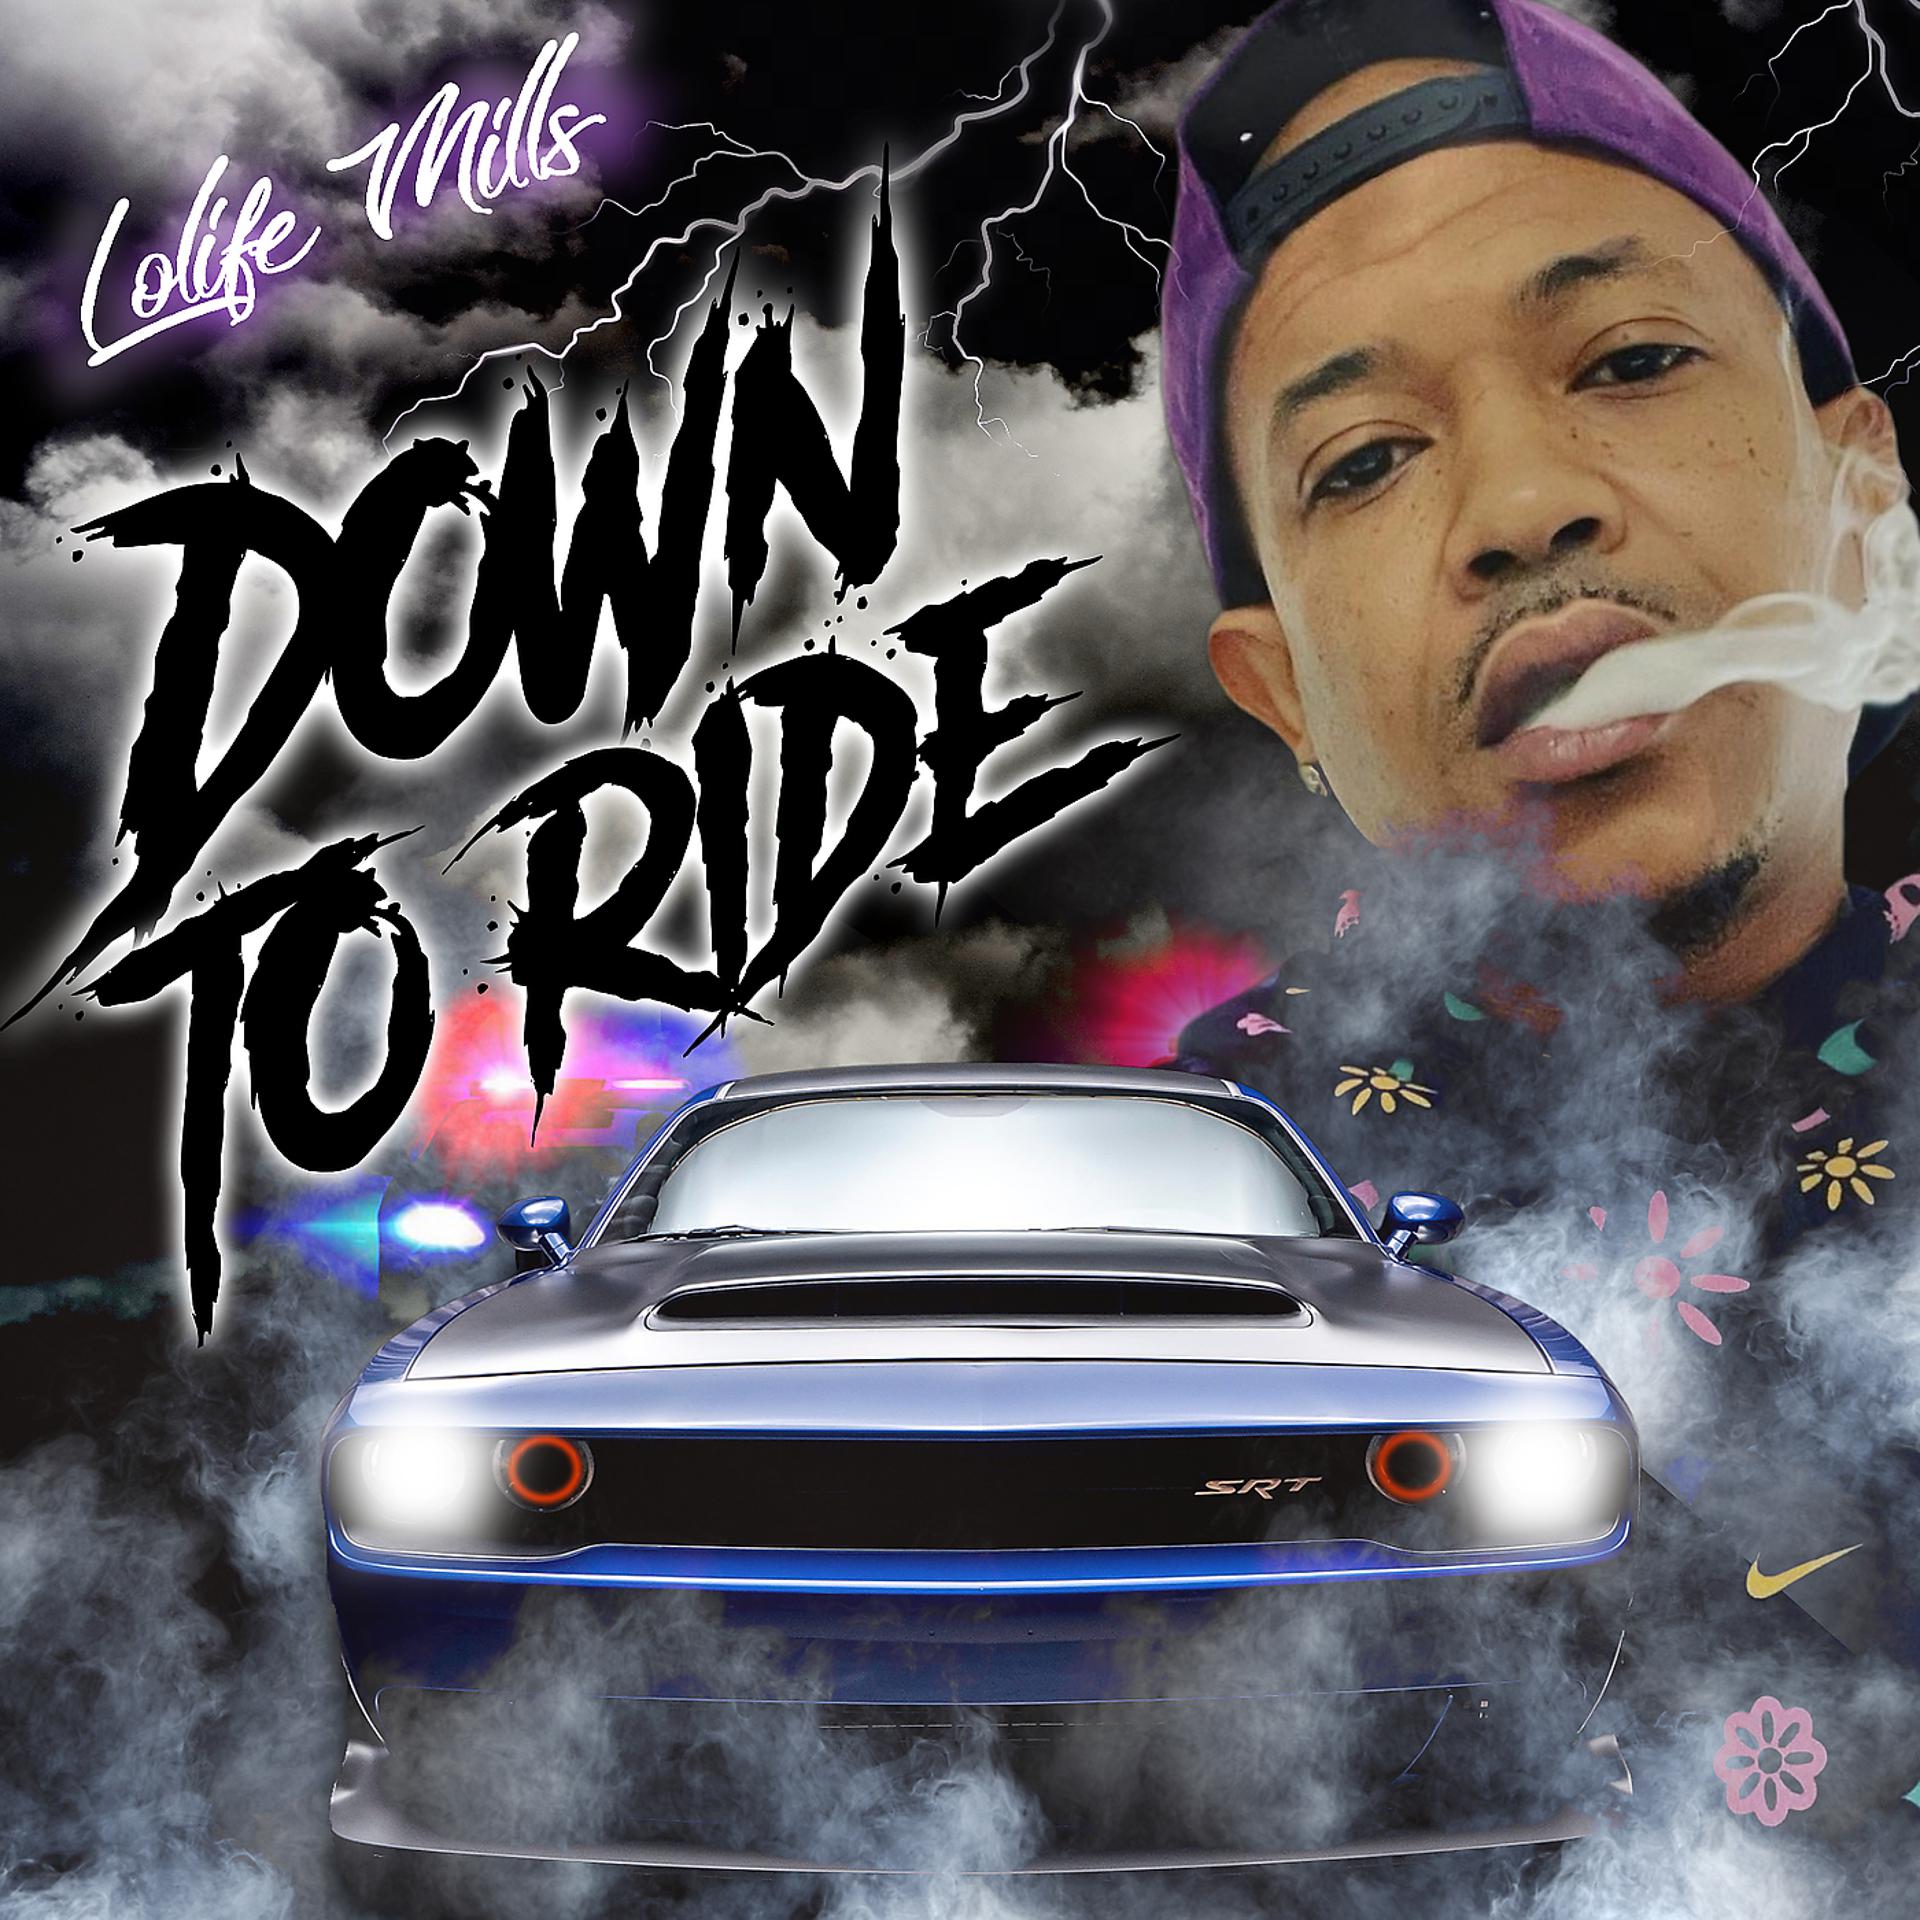 Постер альбома Down to Ride